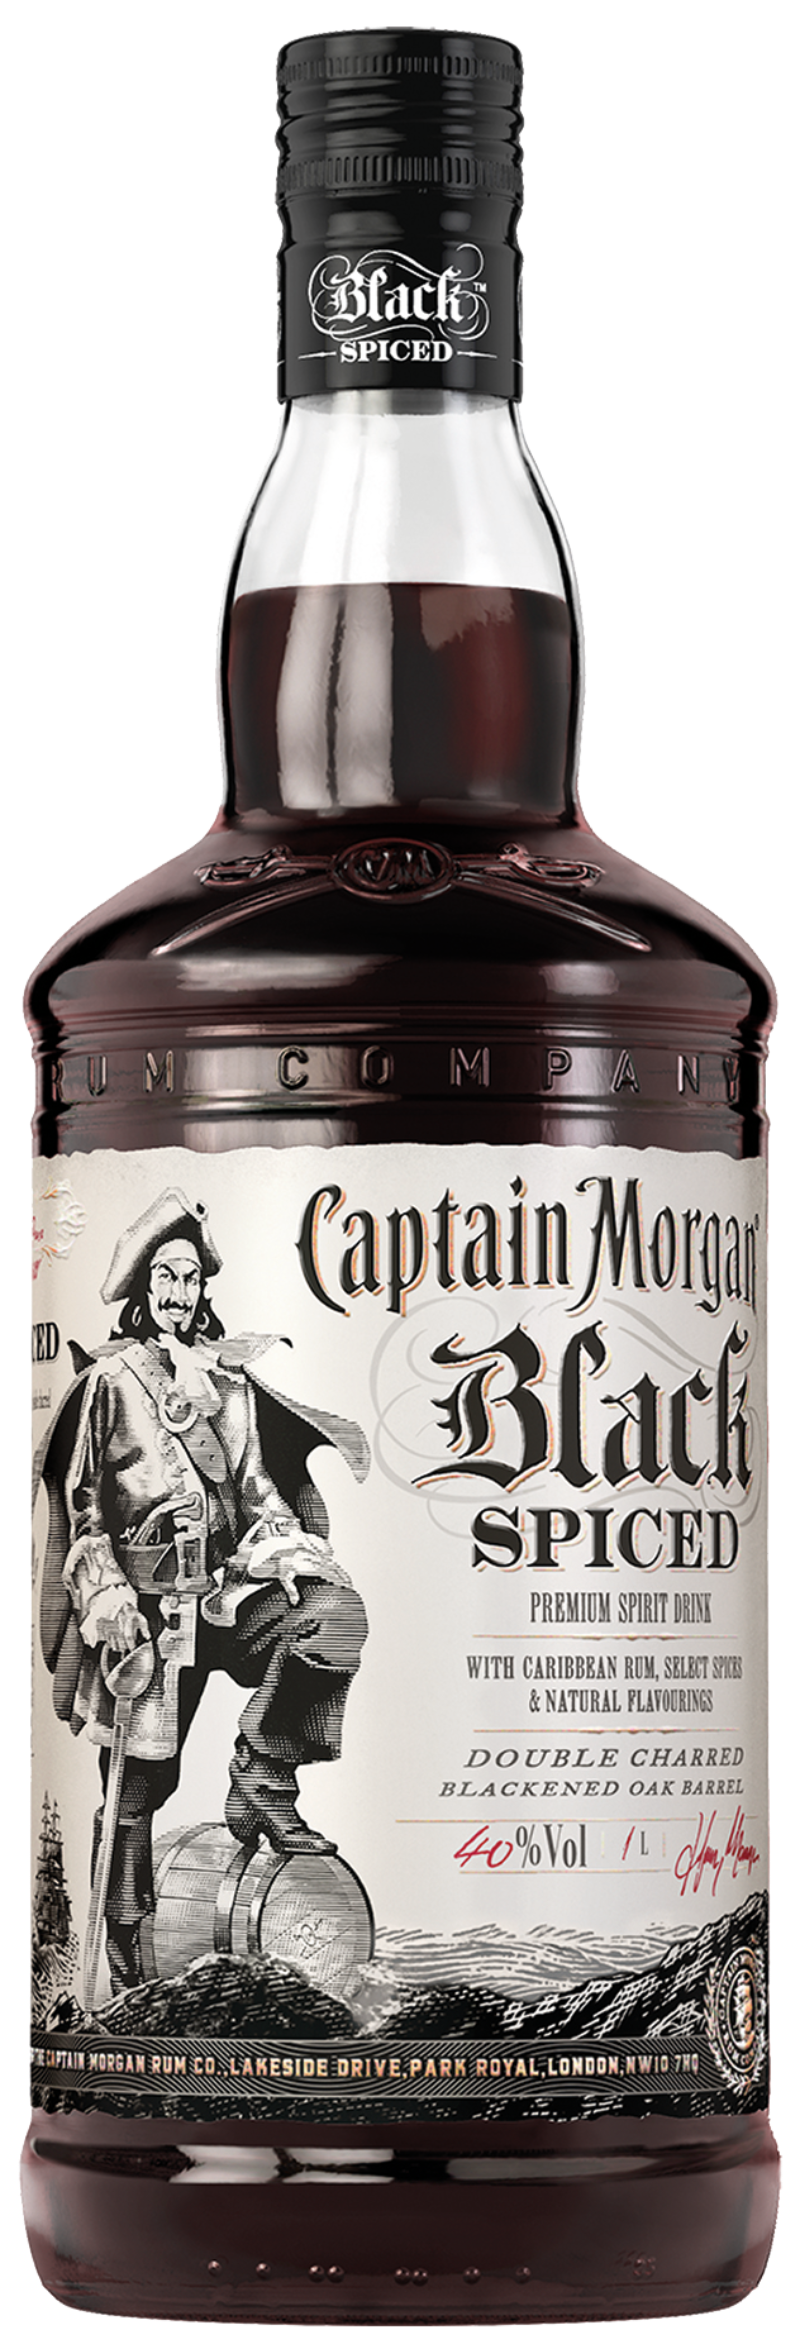 100 Black Spiced cl Captain vol 40% - Morgan